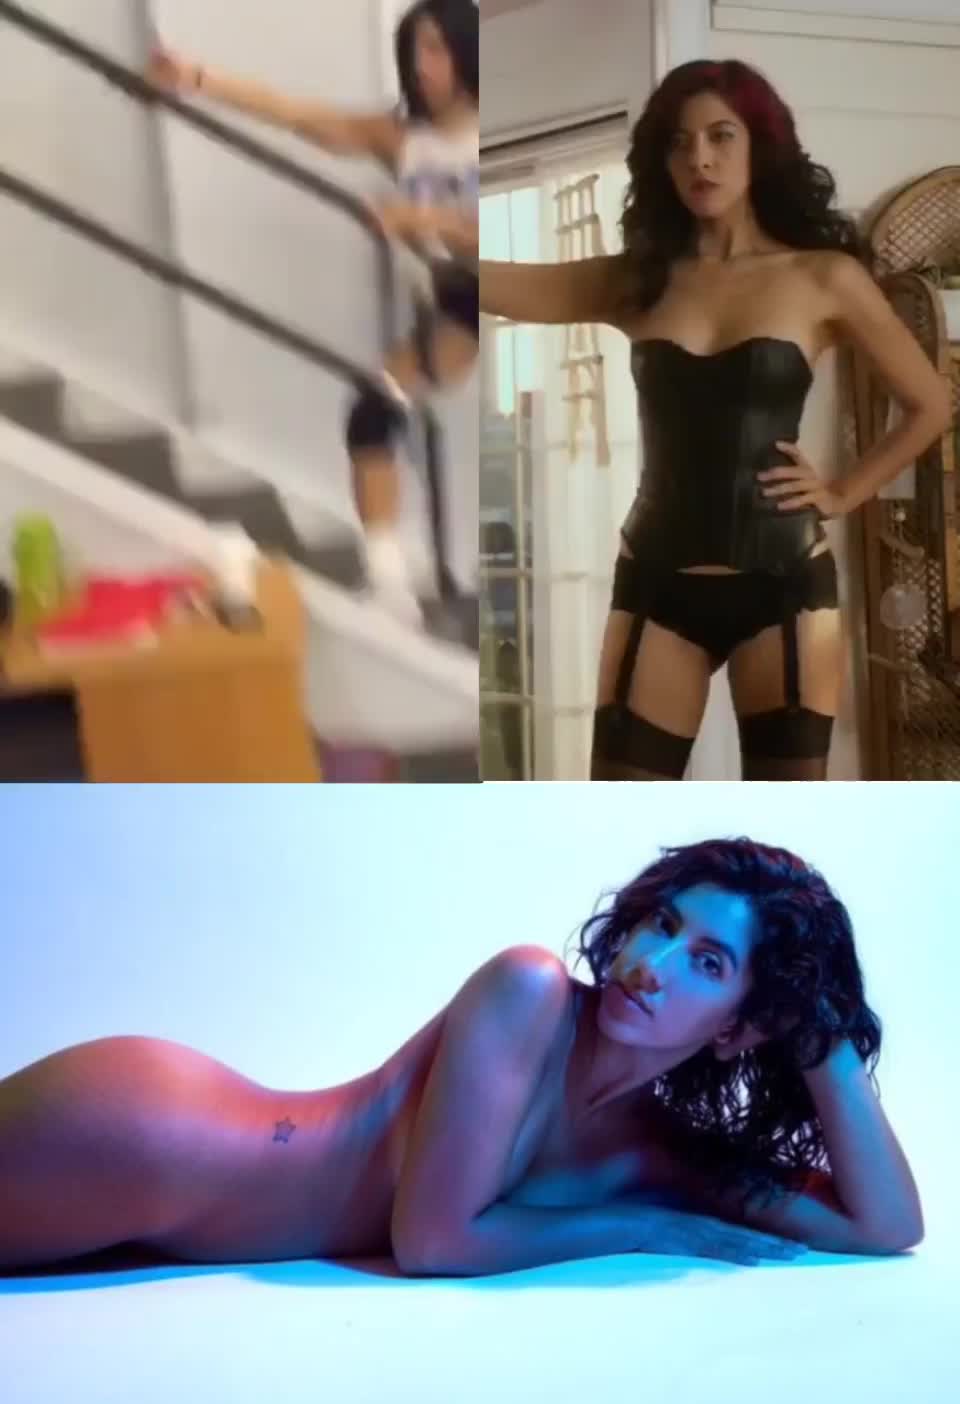 Hopefully we get to see Stephanie Beatriz's sexy ass on screen again soon